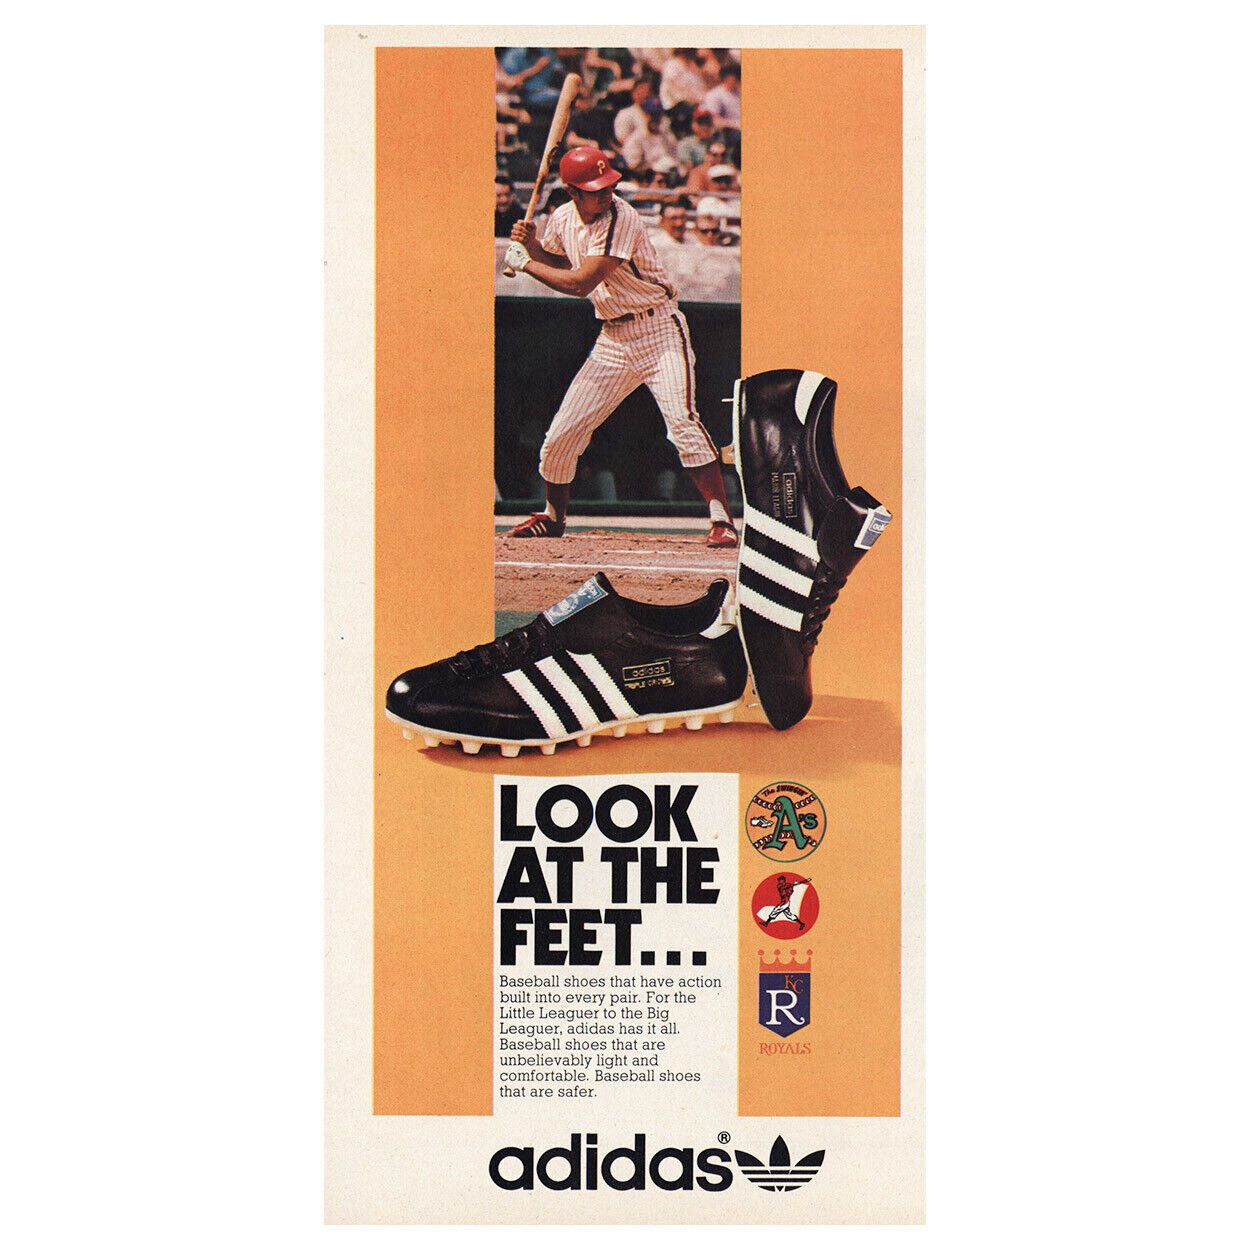 1974 Adidas: Look At the Feet Vintage Print Ad